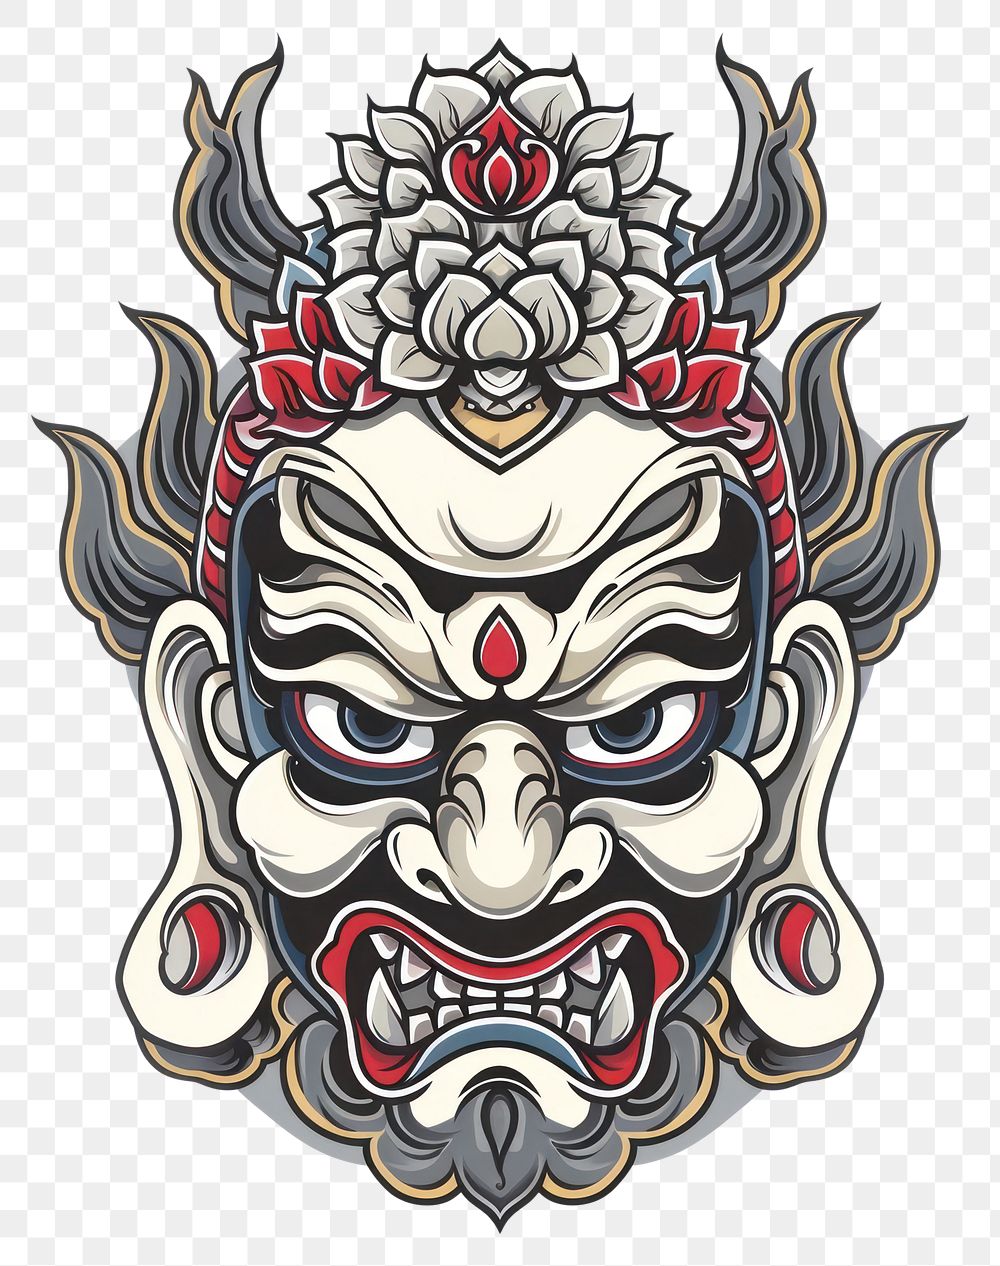 PNG Tattoo illustration of a buddhist face emblem symbol art.